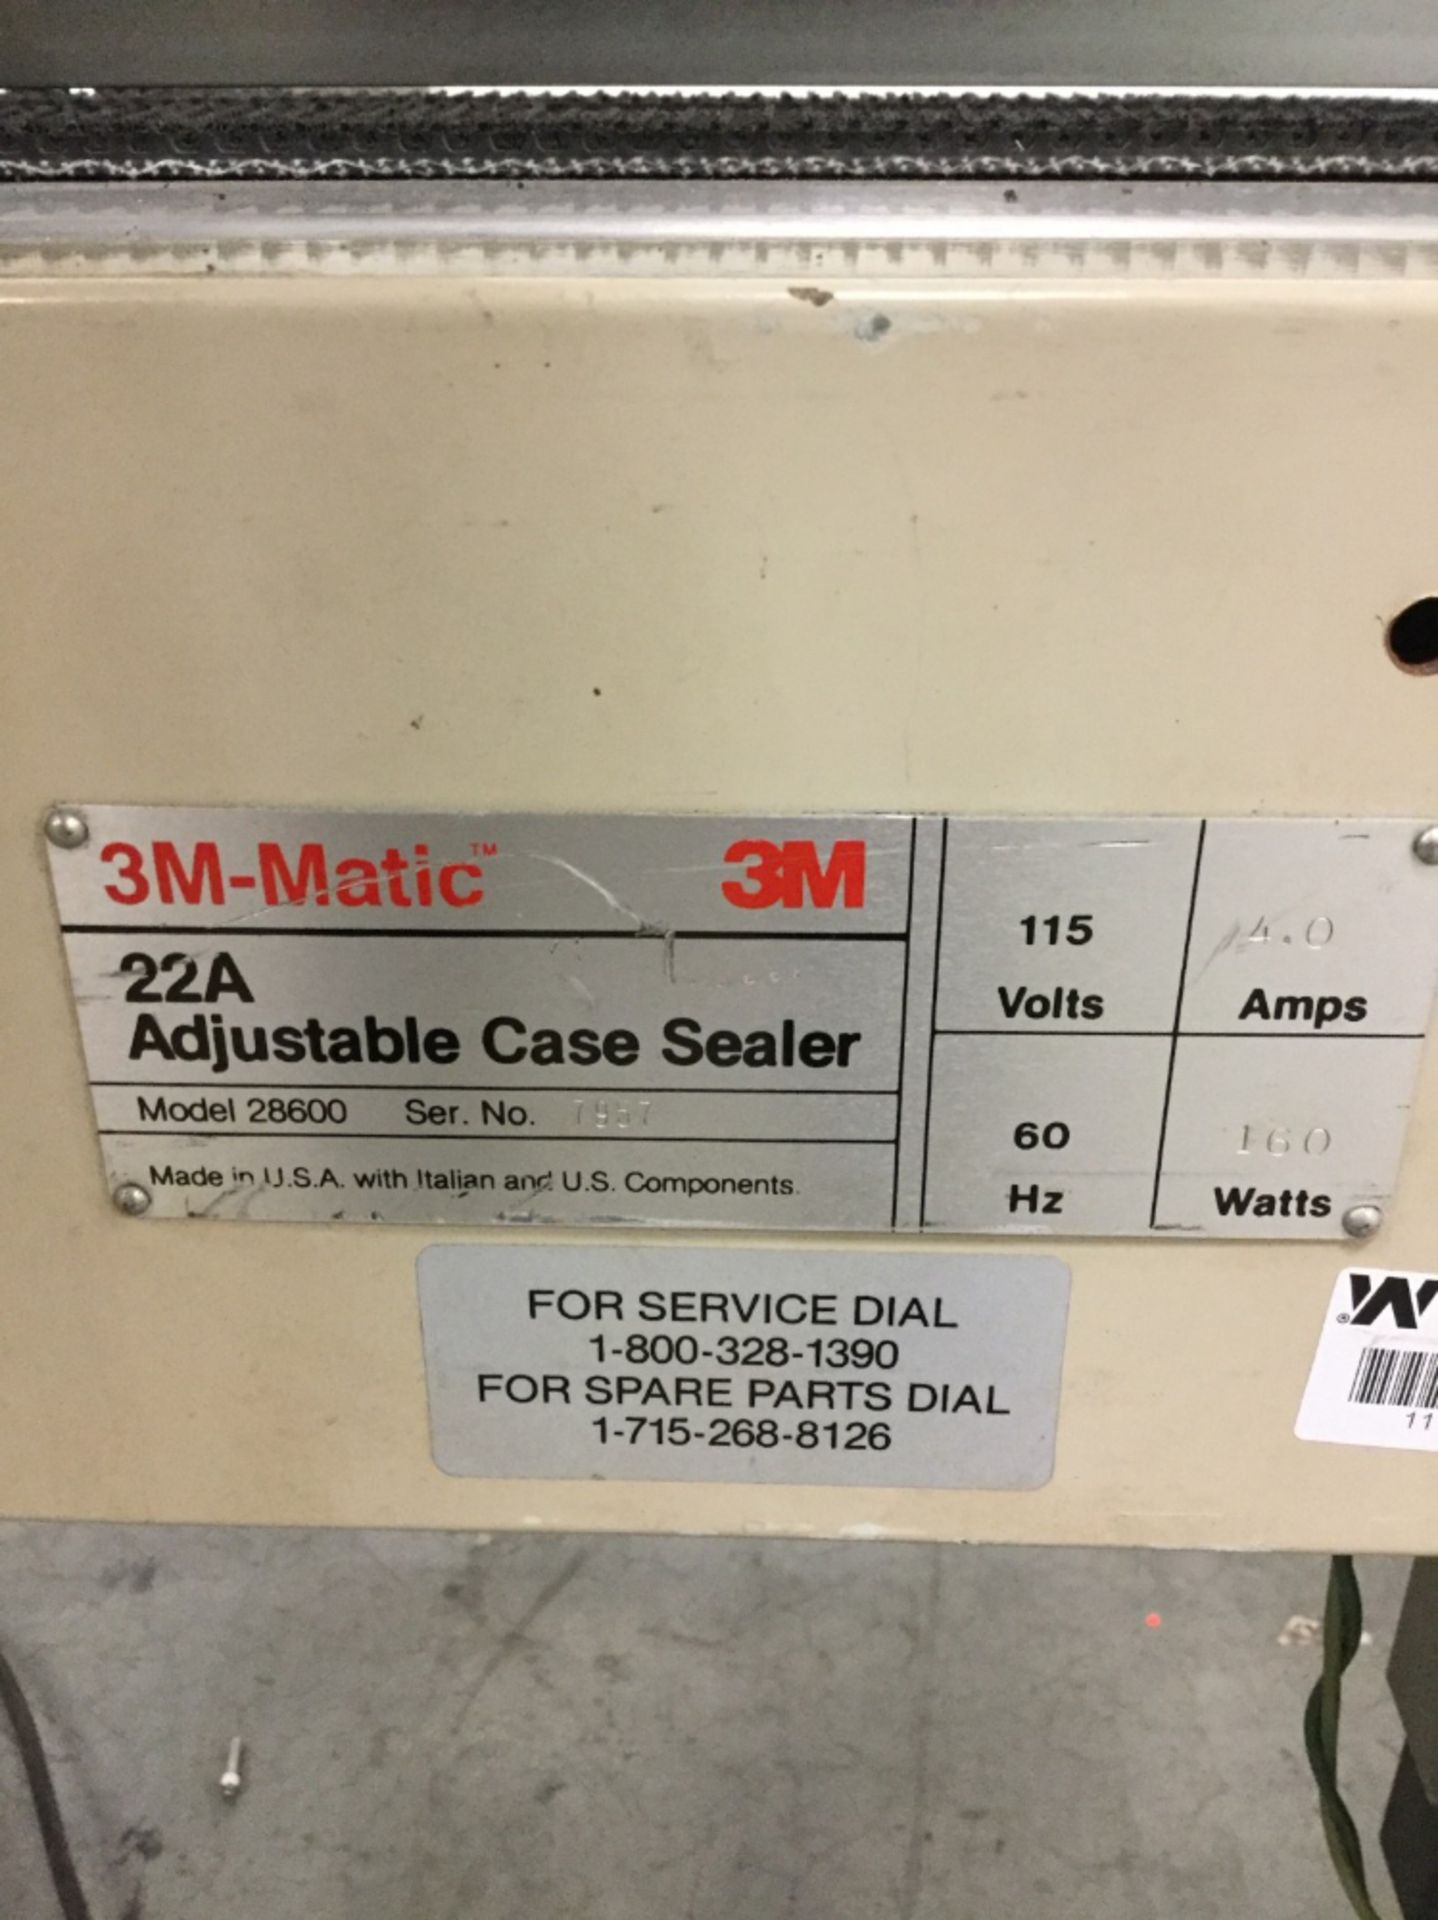 3M-Matic 22A Adjustable Case Sealer - Image 2 of 3